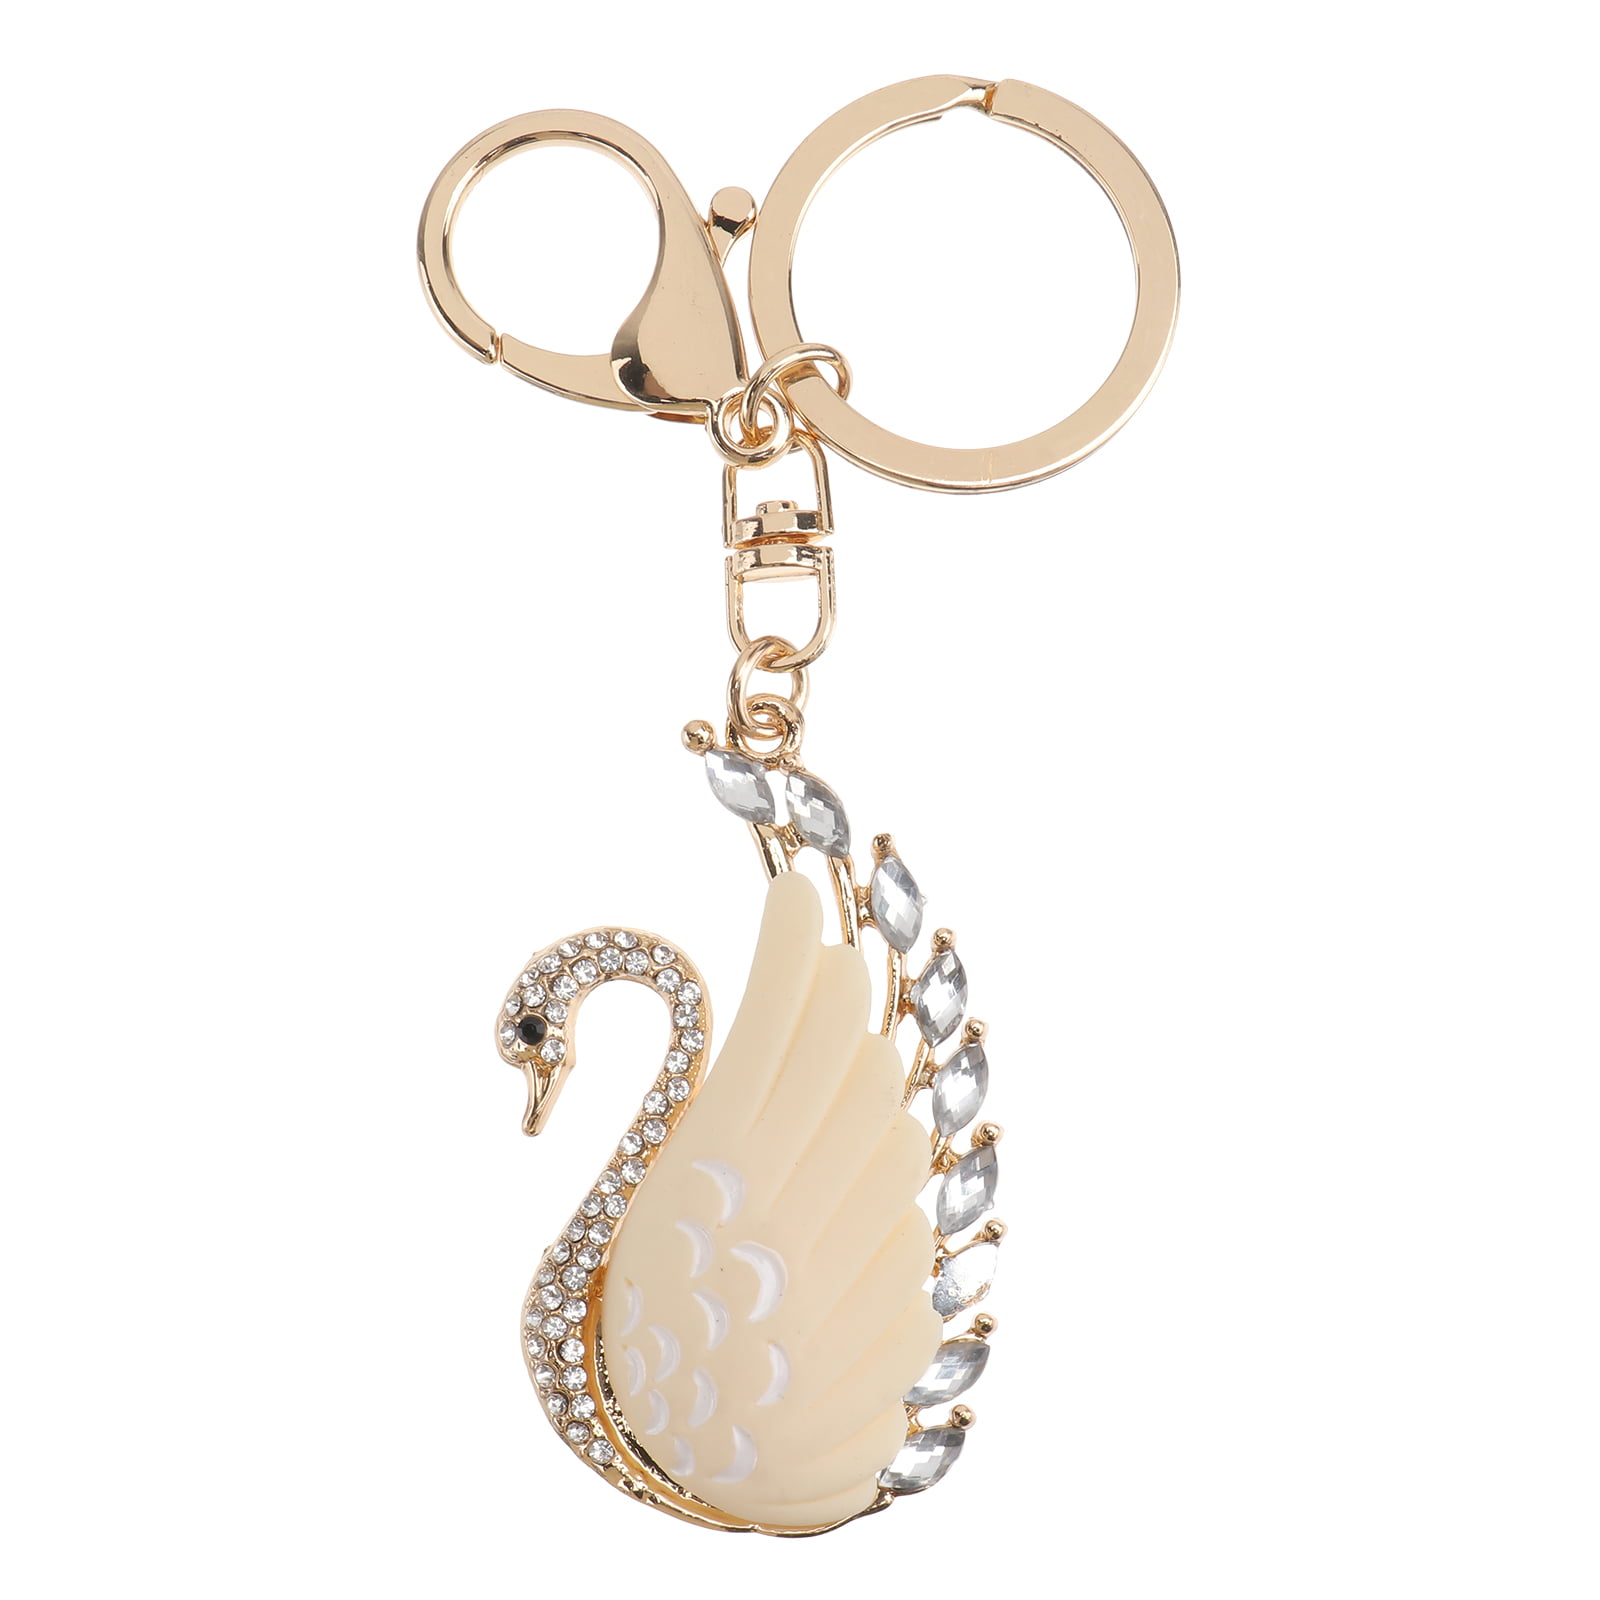 Charm Deer Keyrings Heart Keychain Key Chains Ring Women Men Accessories Gift 2P 